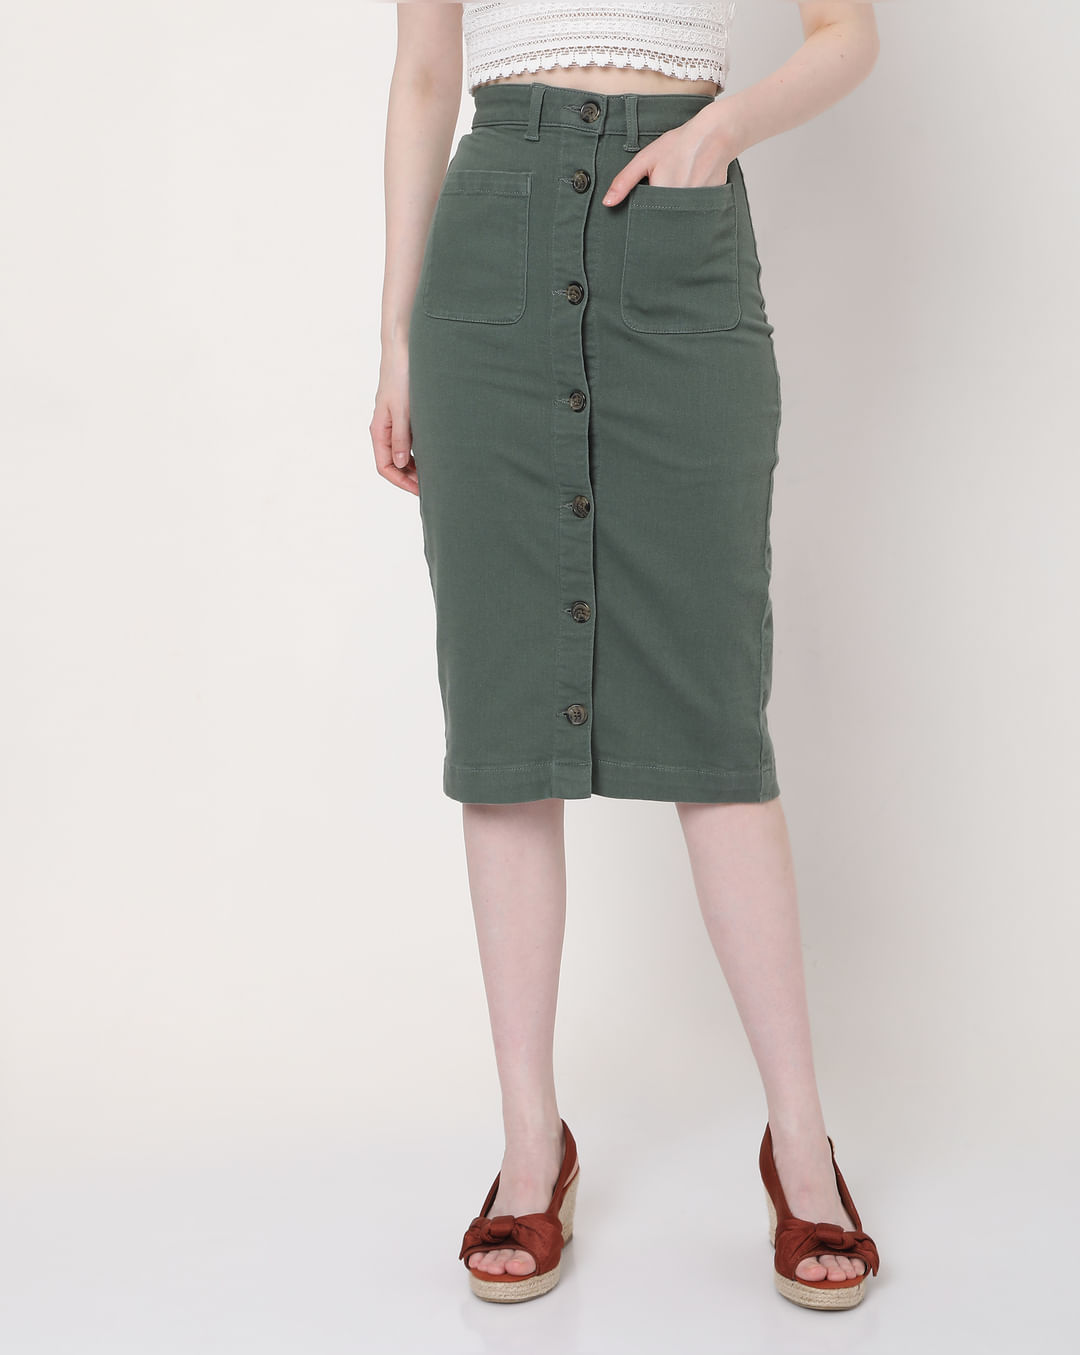 Buy Green Skirt In India.